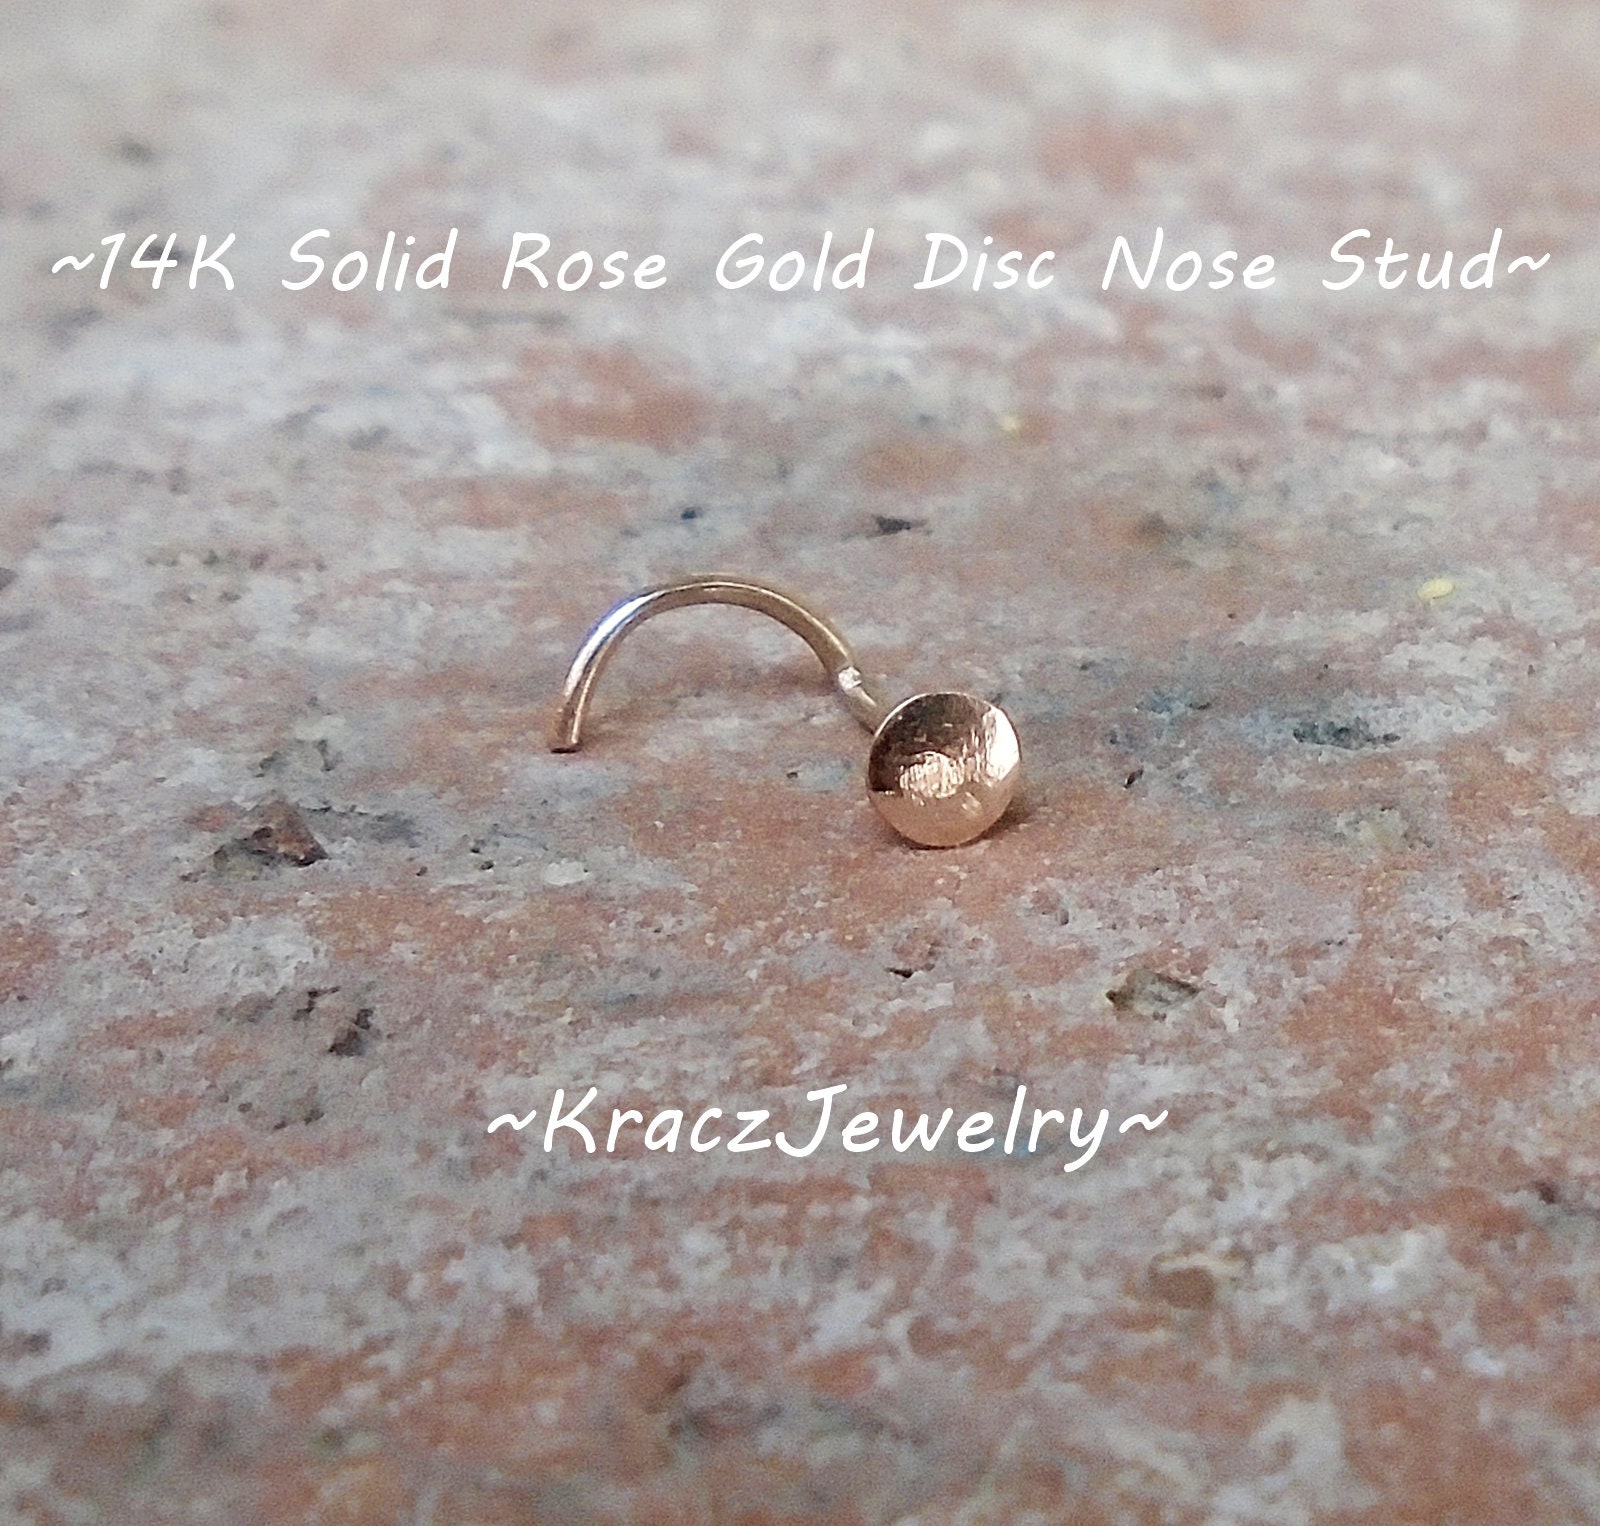 20G & 18G Stainless Steel Rose Gold Nose Hoop Rings | UrbanBodyJewelry.com